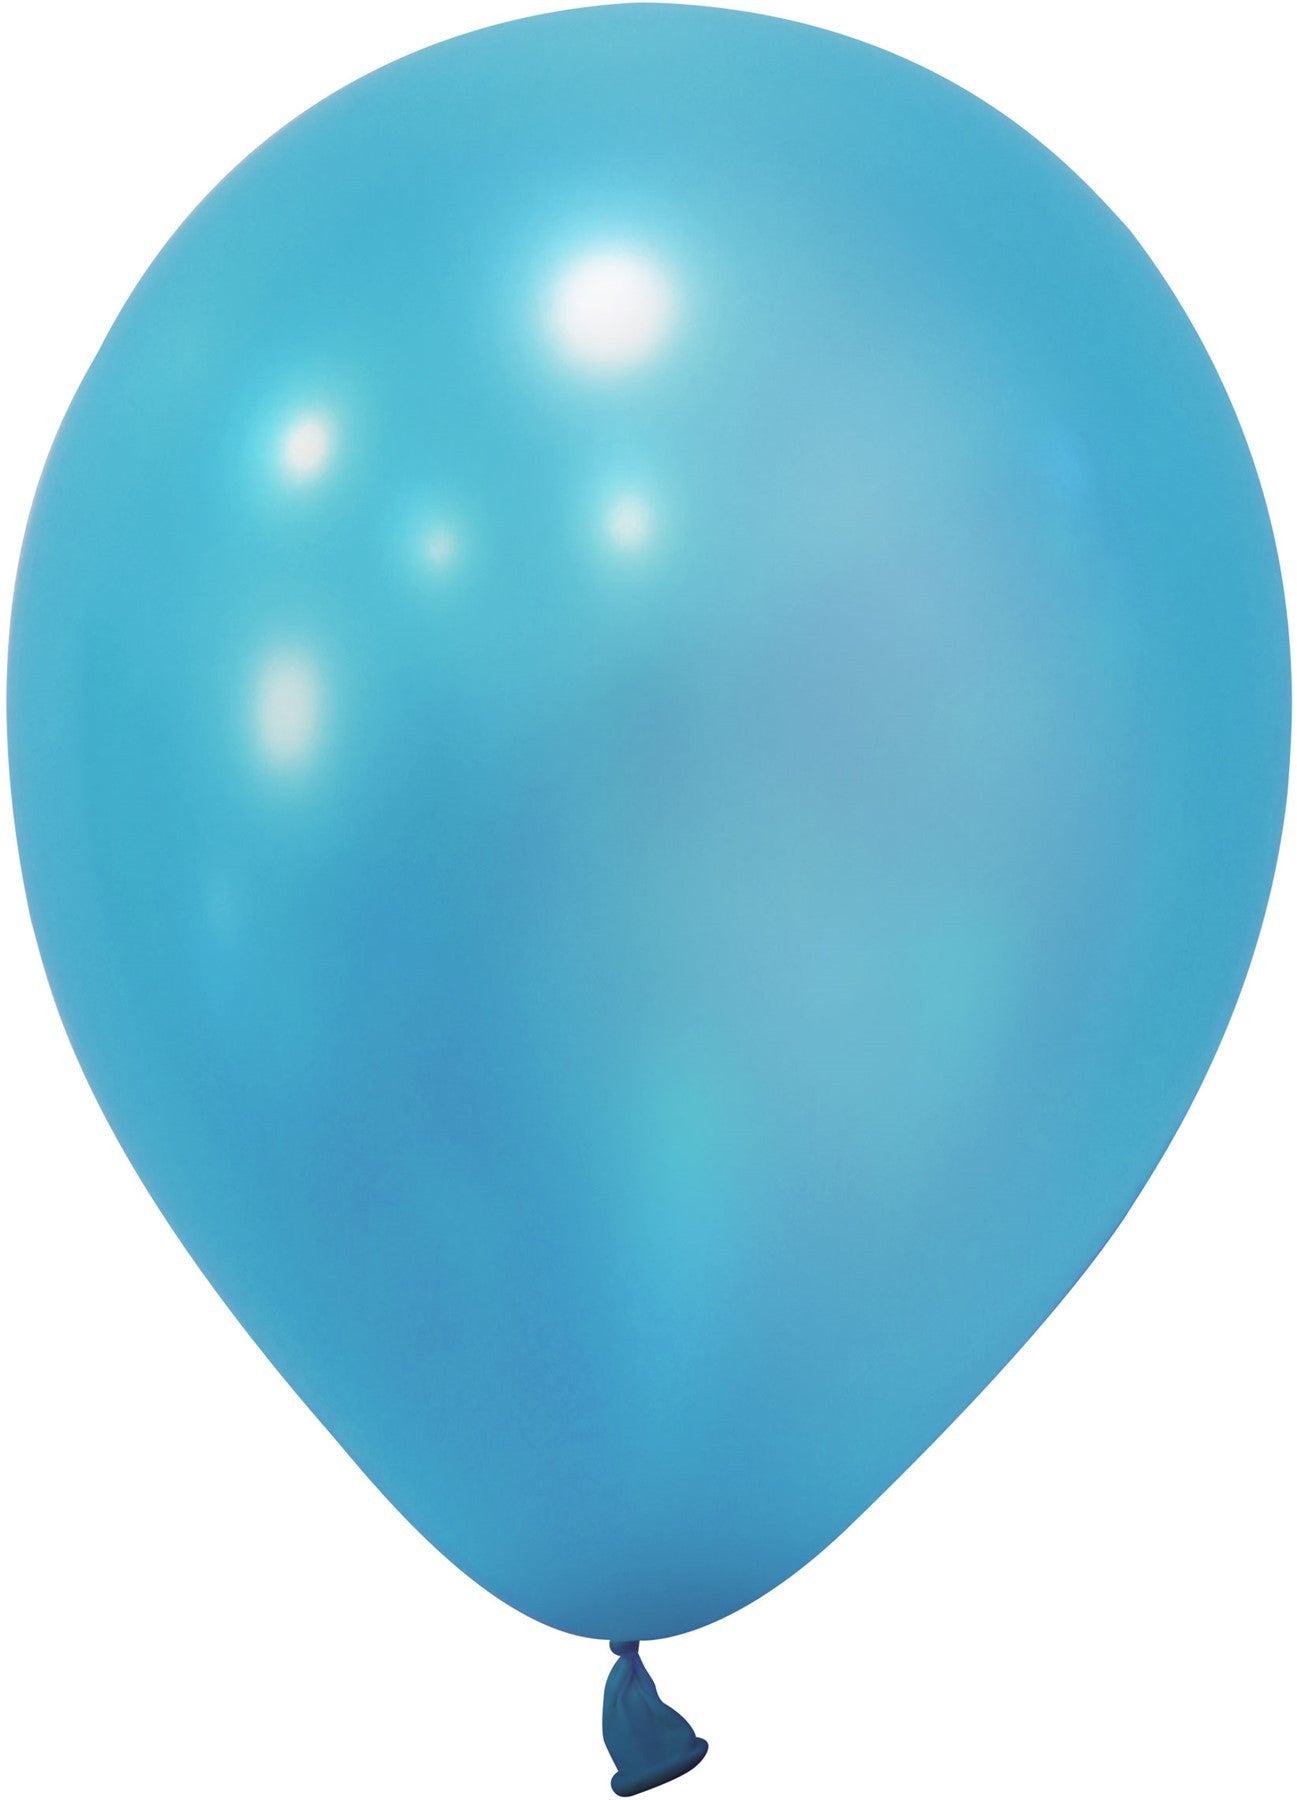 View Light Blue Metallic Latex Balloon 12 inch Pk 100 information